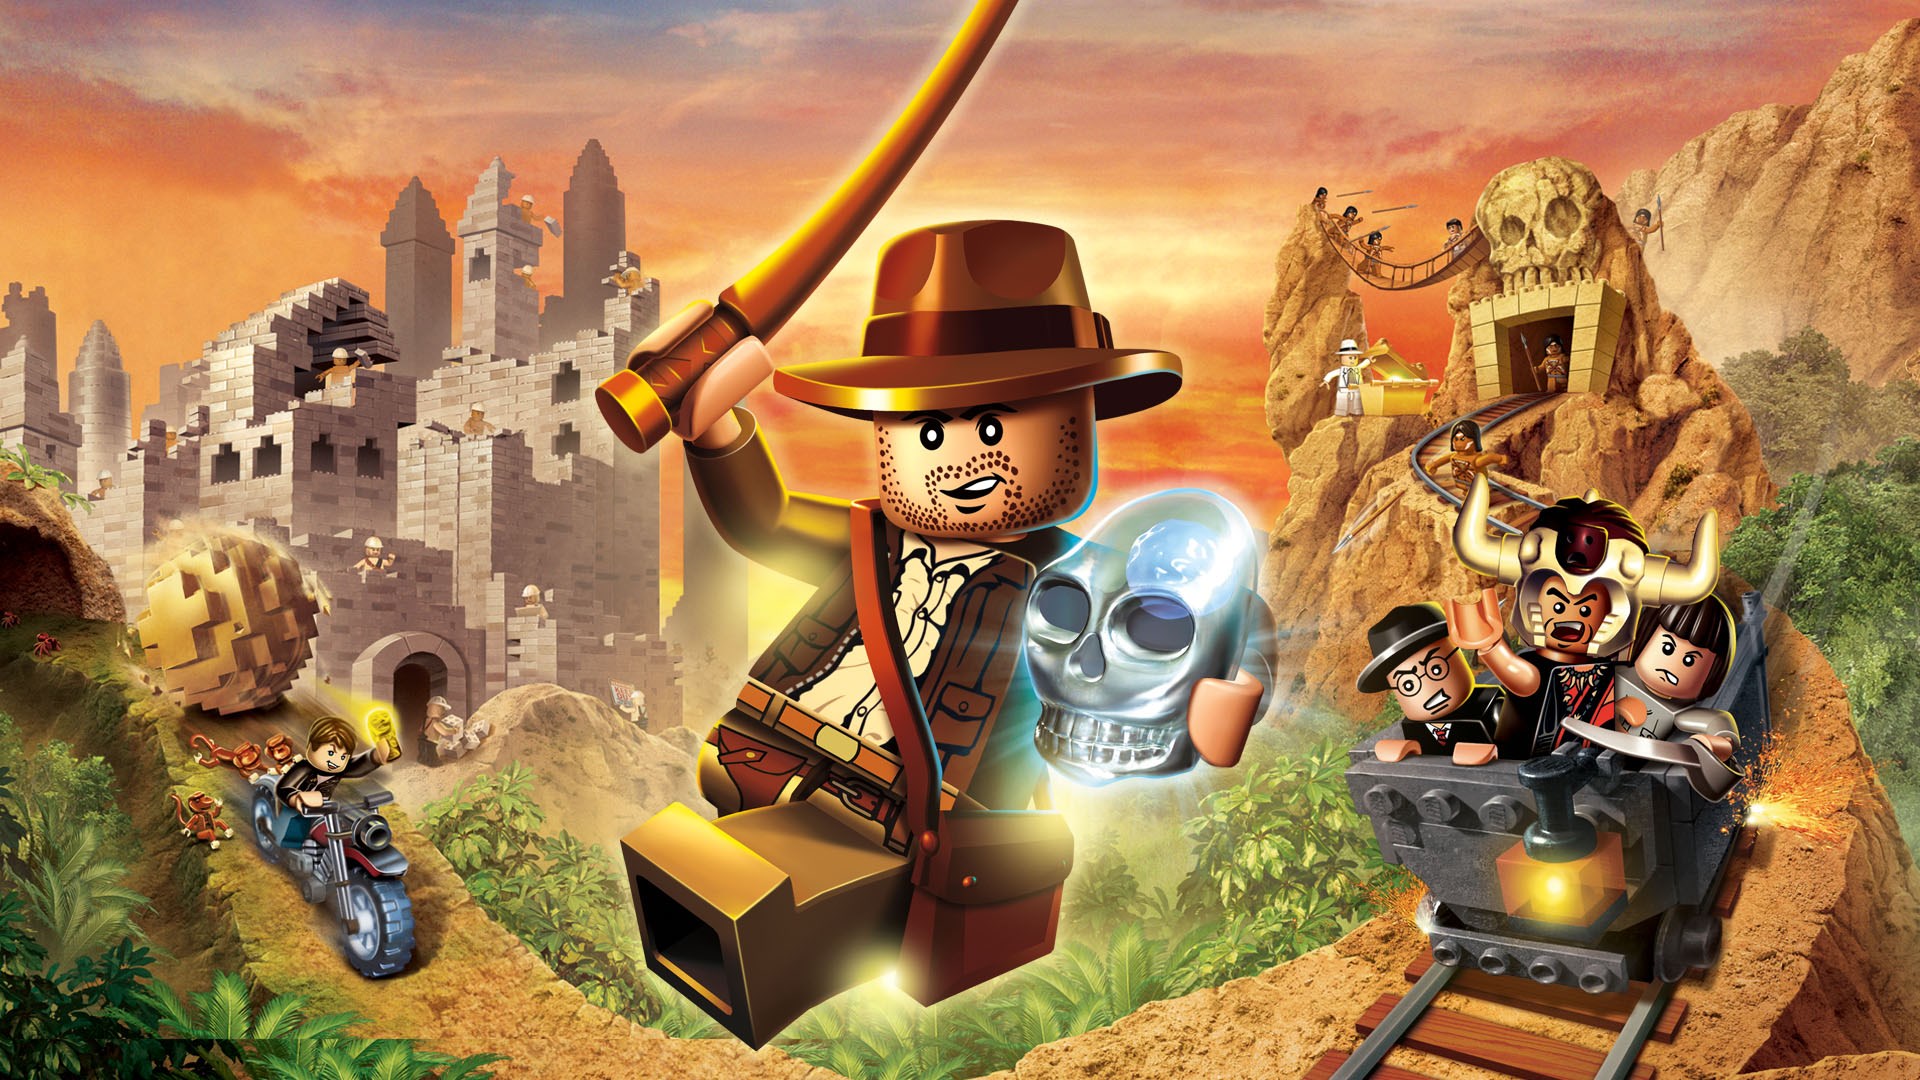 Lego Indiana Jones 2 Xbox 360 Cheats